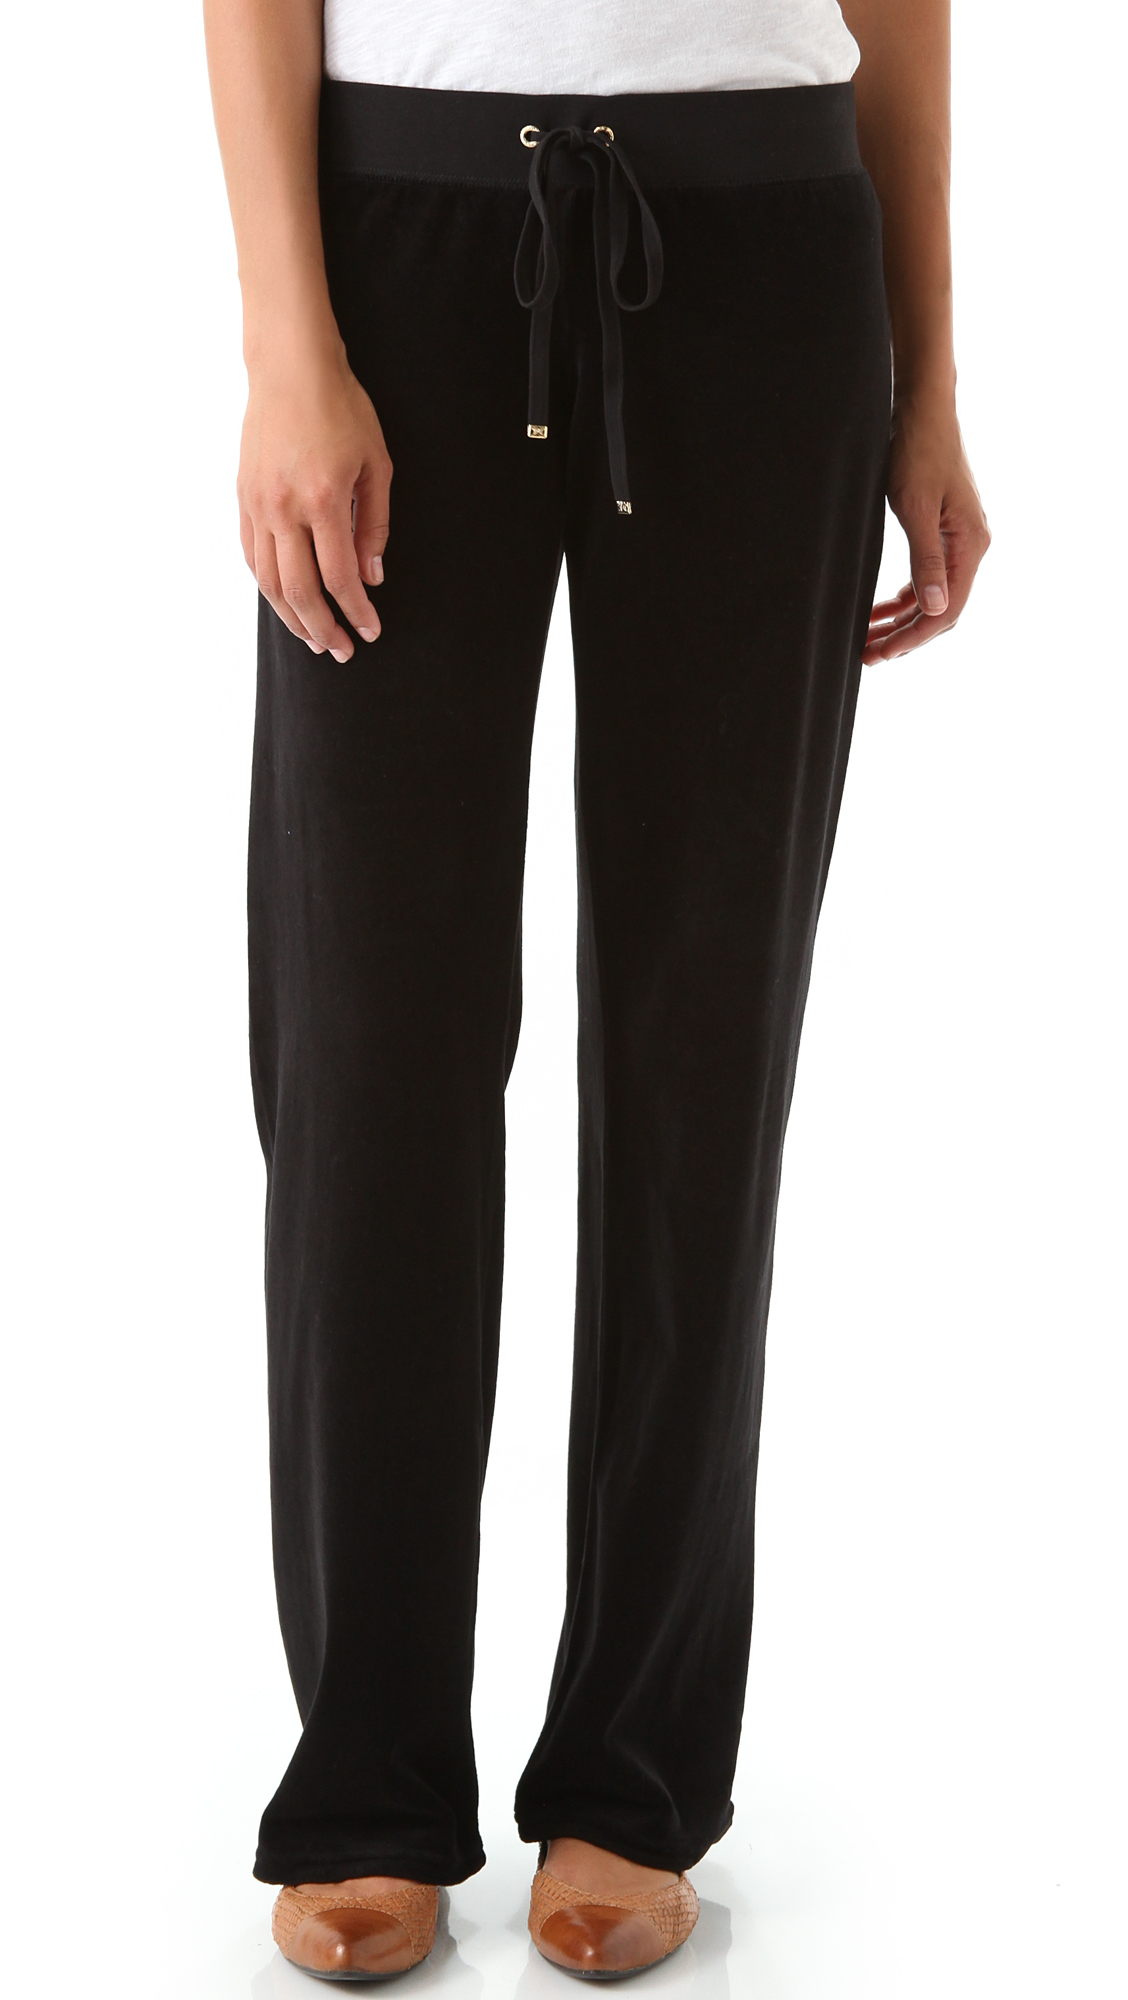 Juicy couture Velour Original Leg Drawstring Pants in Black | Lyst